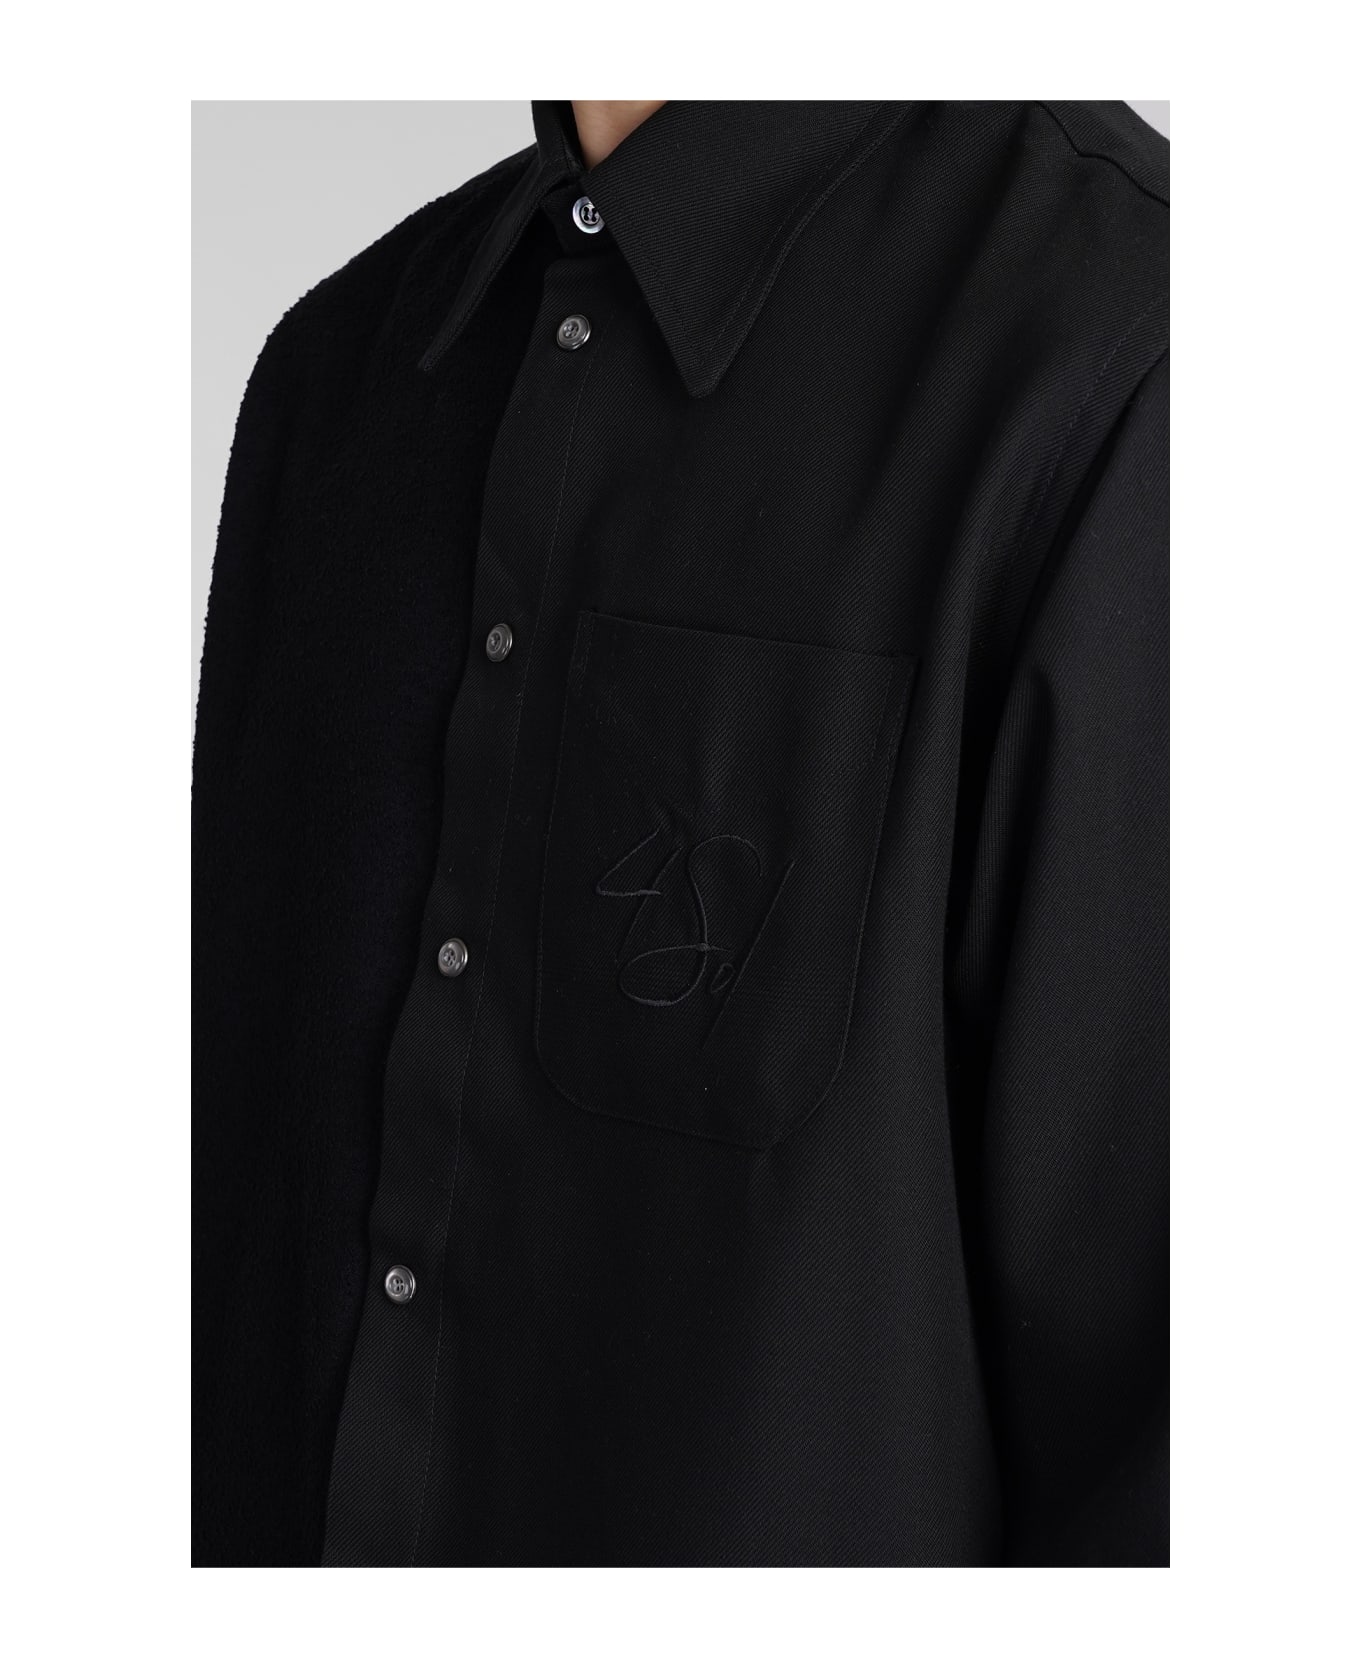 4sdesigns Shirt In Black Cotton - black シャツ